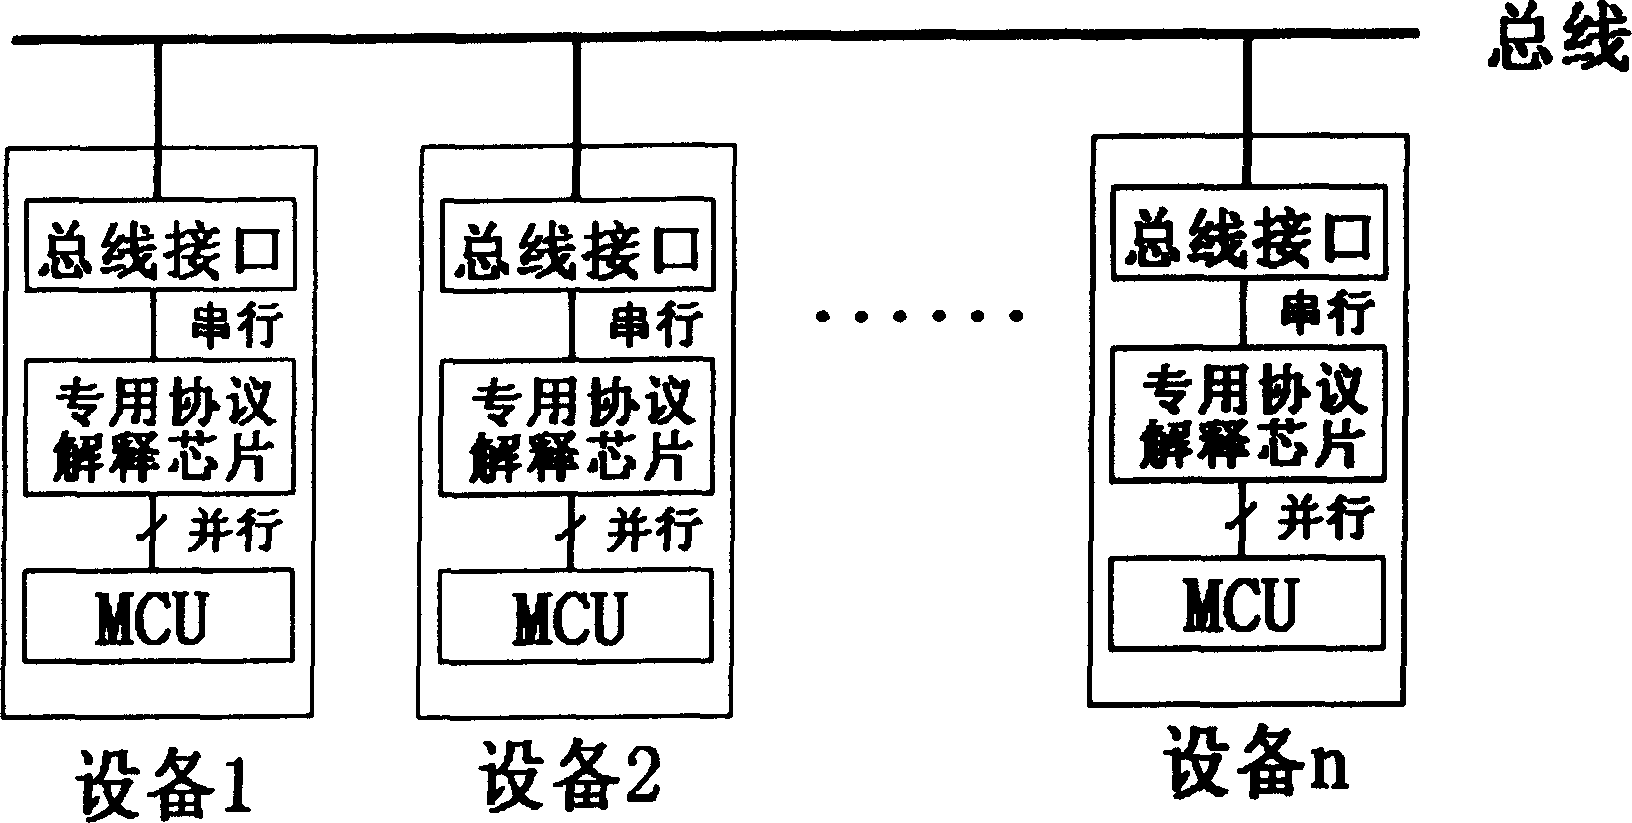 Multi-host communication system